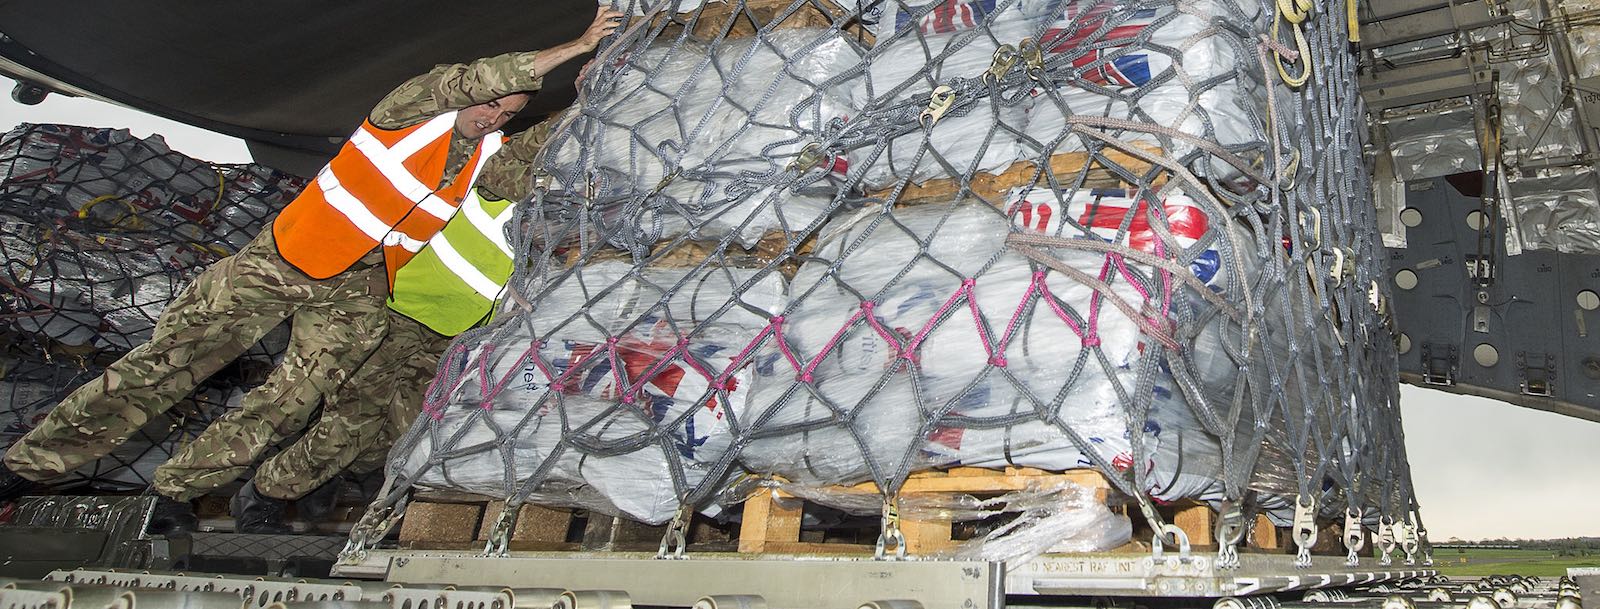 Department for International Development relief supplies bound for Nepal (Photo: RAF Brize Norton/Flickr)